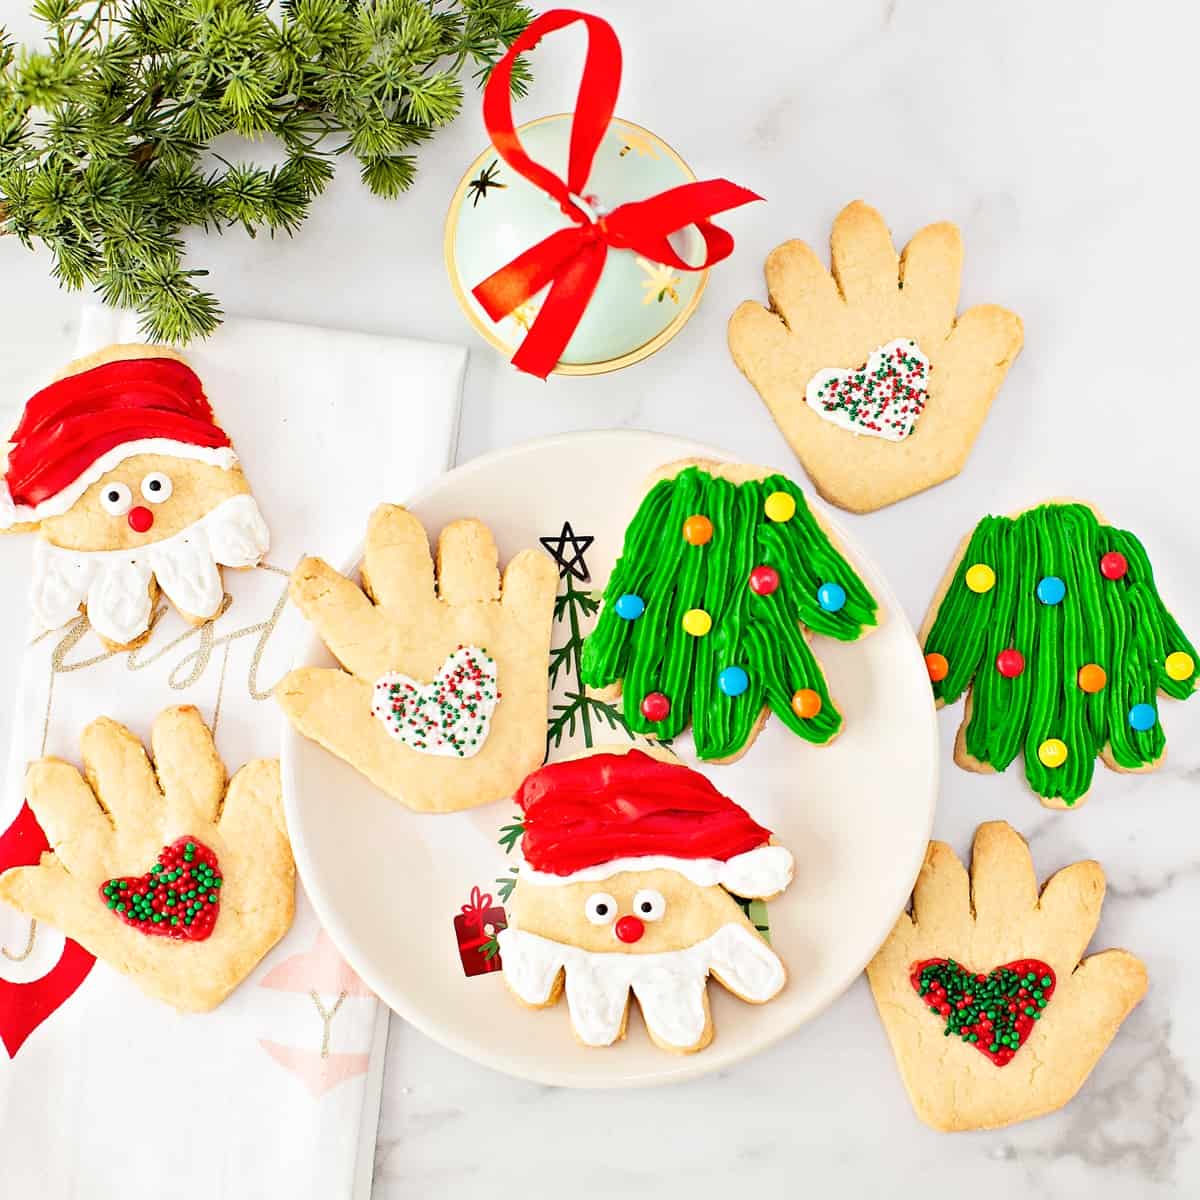 Fun Christmas Cookies | Handprint Sugar Cookies for the Holidays